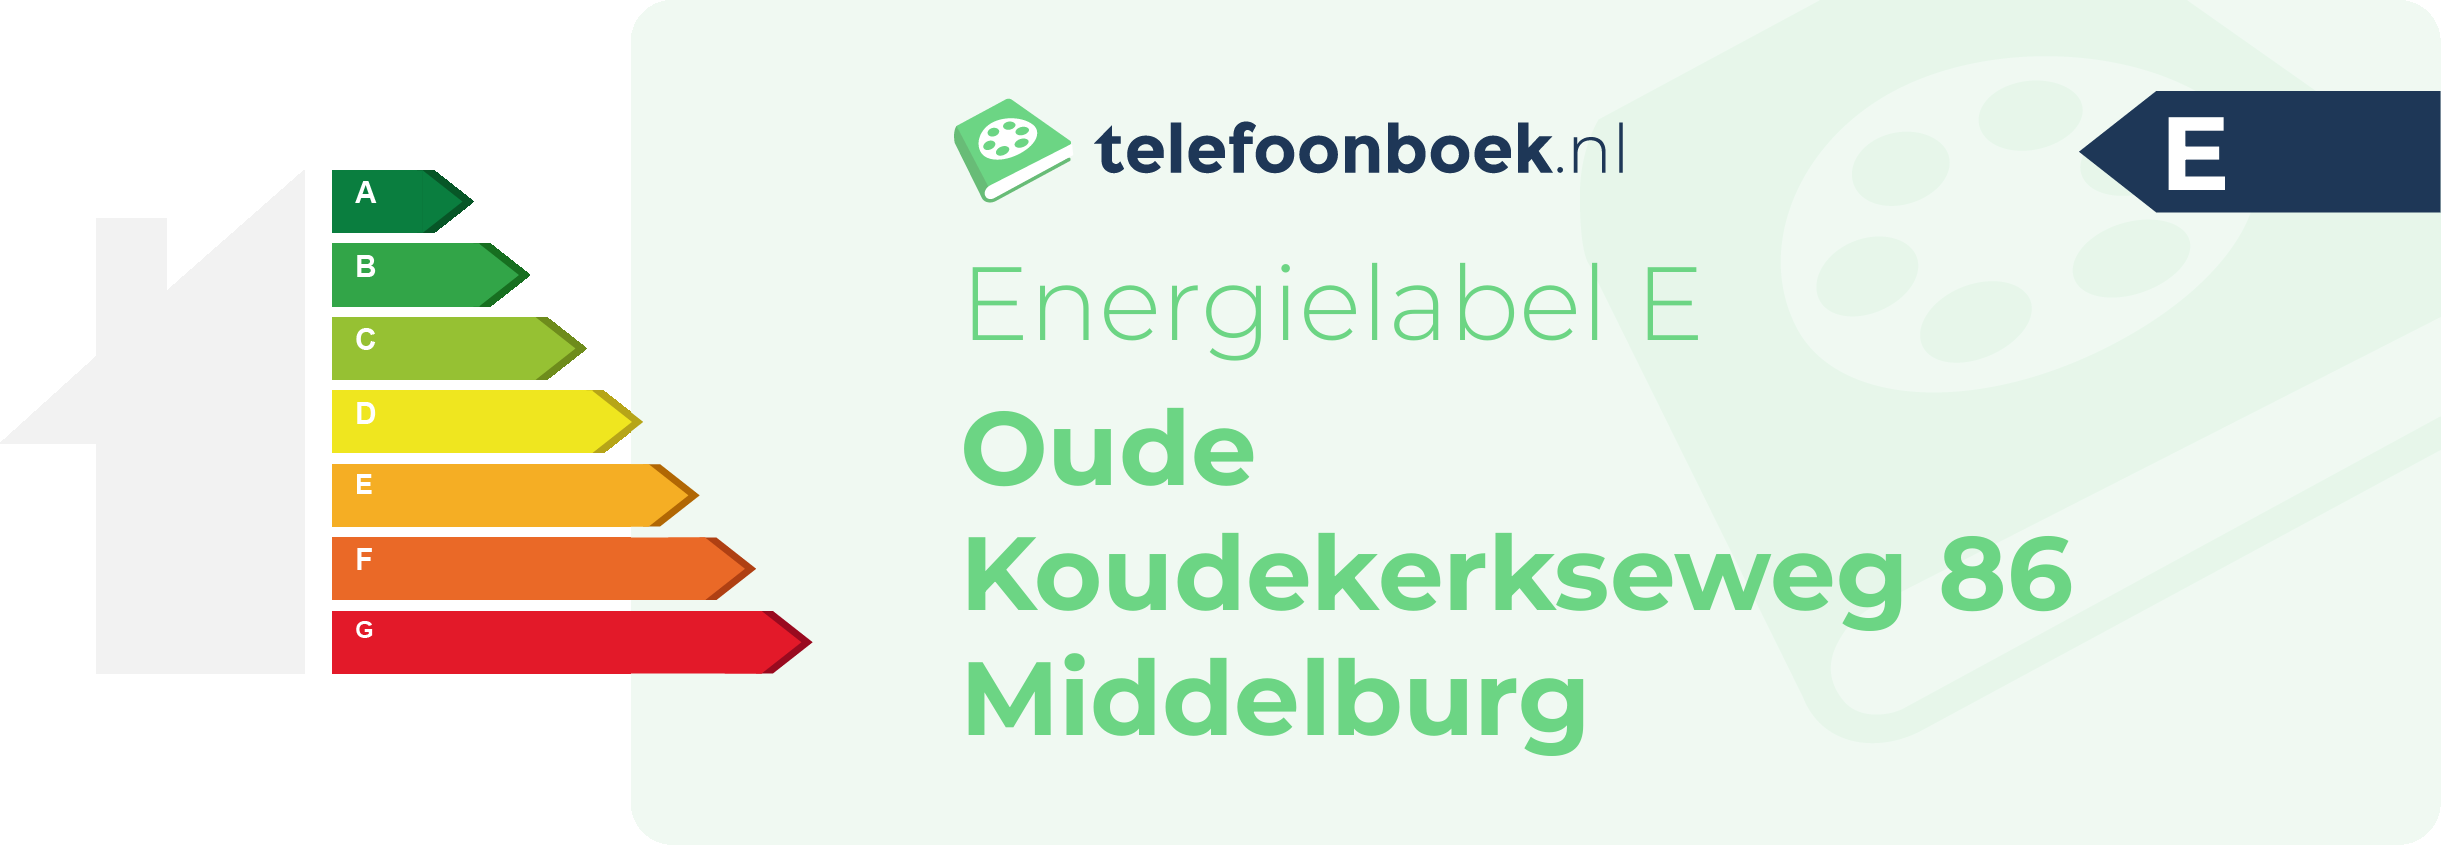 Energielabel Oude Koudekerkseweg 86 Middelburg